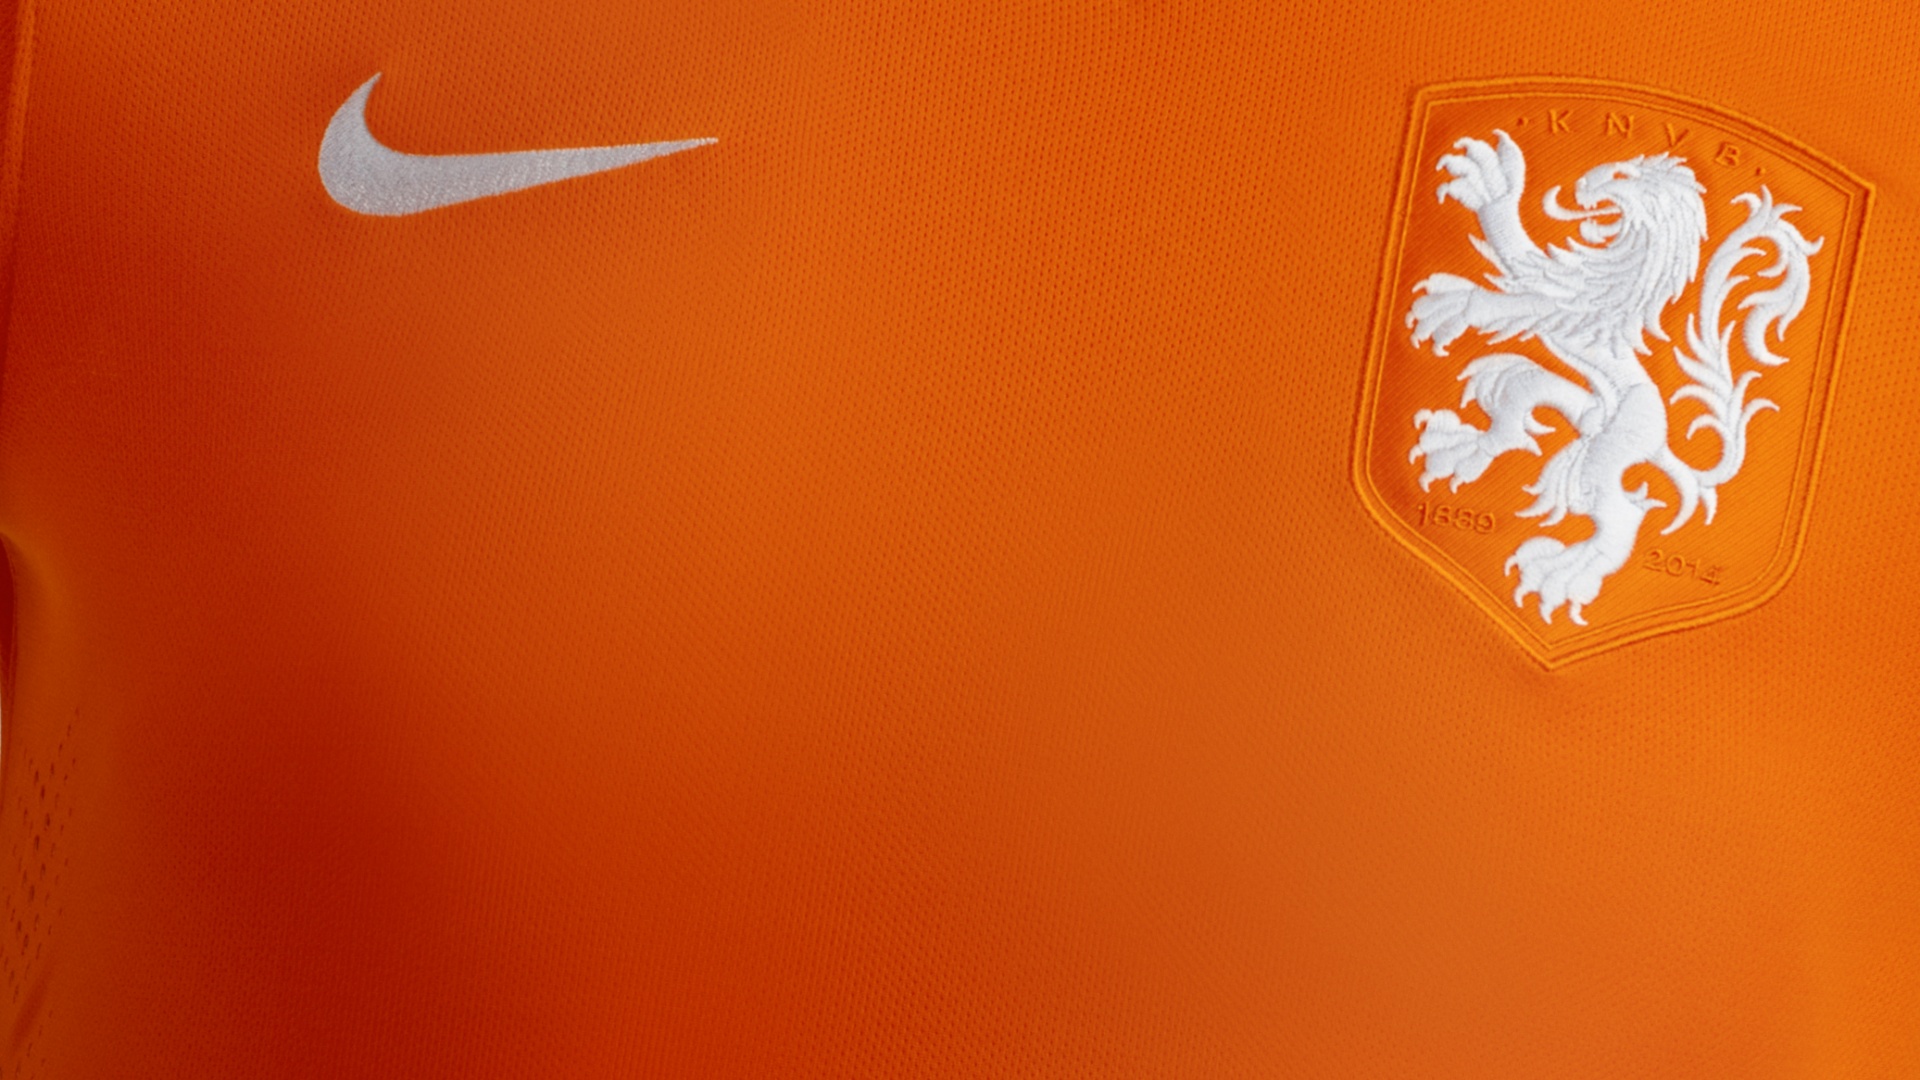 Netherlands Football Team Logo / Furniture School Education Specialty ...